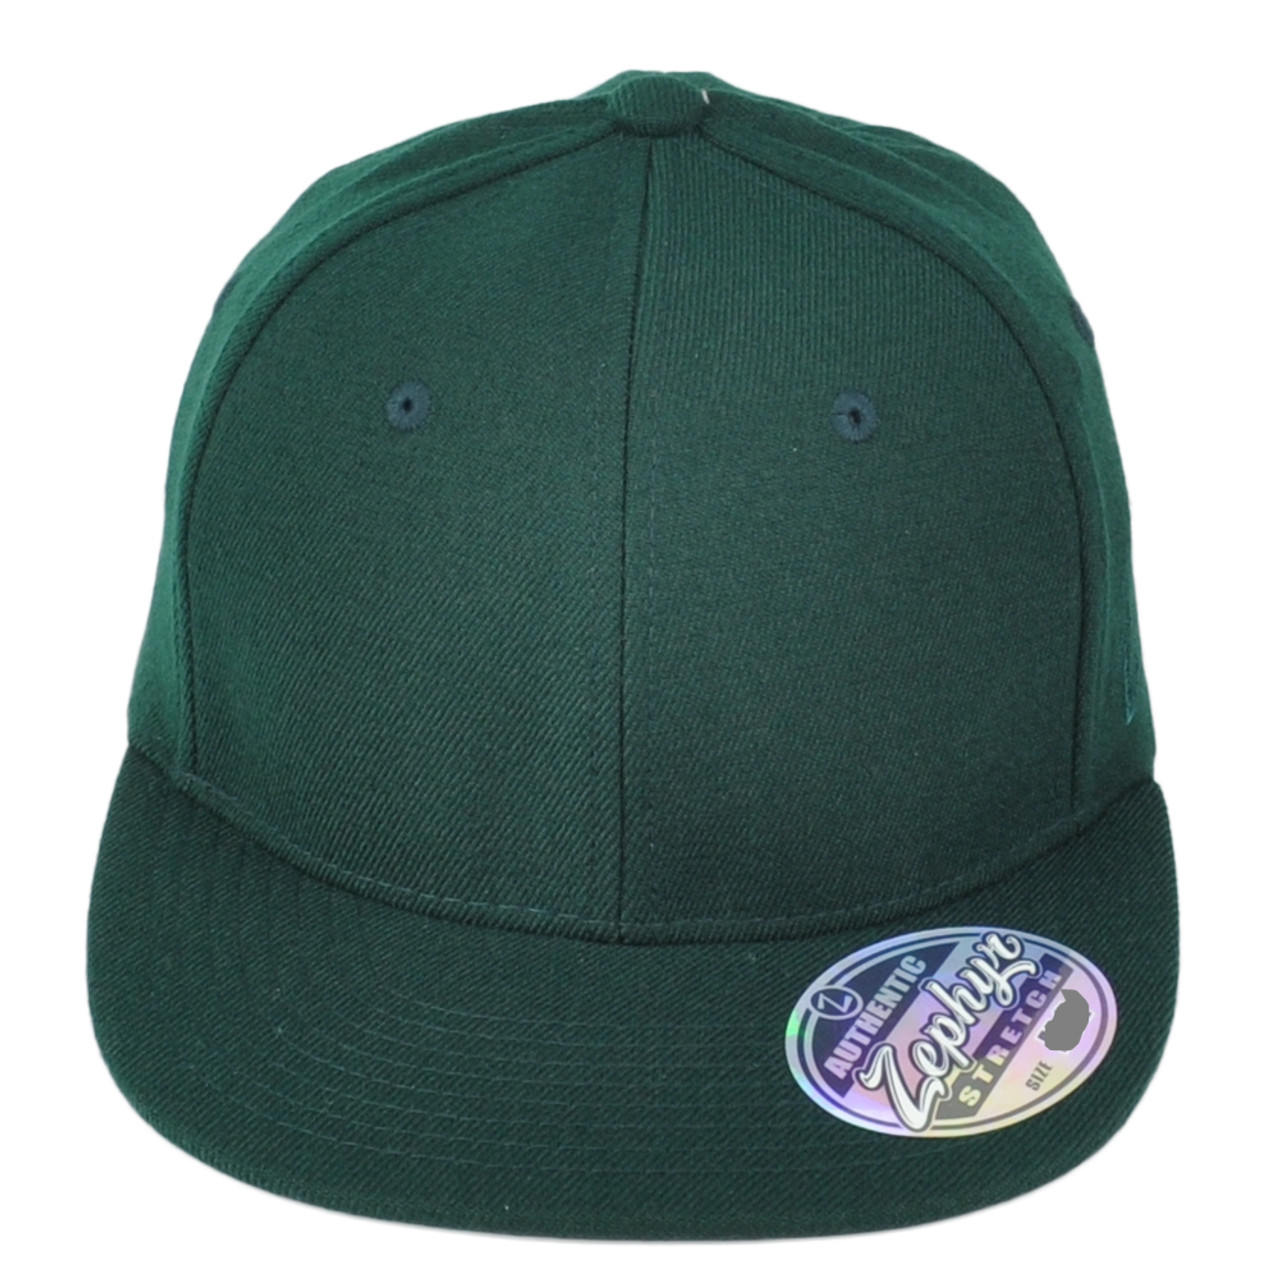 Zephyr Dark Forest Flex Fit Bill Stretch Green Blank Cap Store - Medium/Large Hat Cap Flat